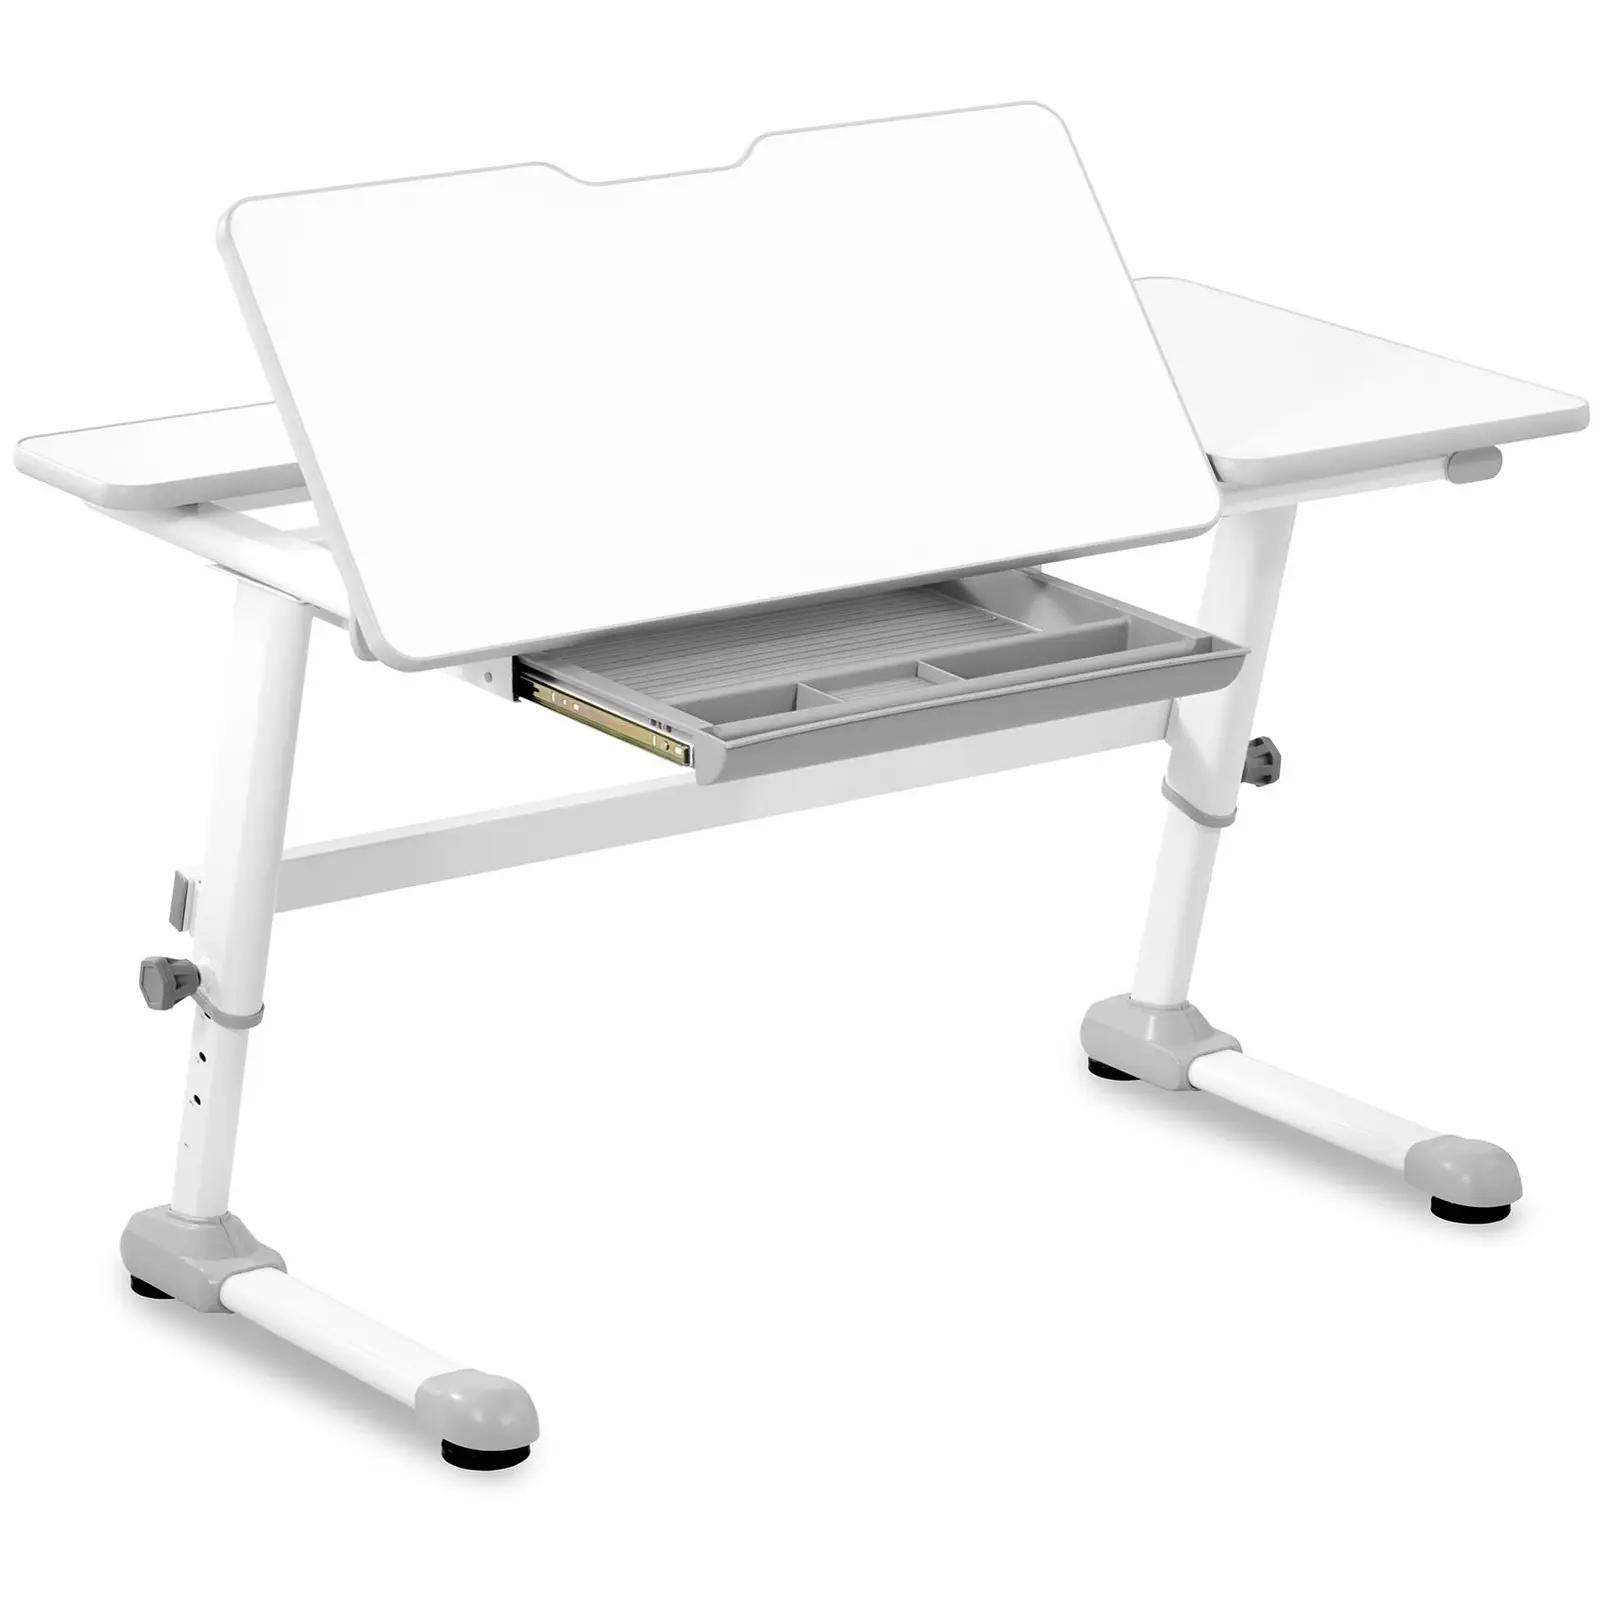 Sitt-stå skrivebord - 120 x 66 cm - tilts 0 - 50° - høyde: 600 - 760 mm - med skuff